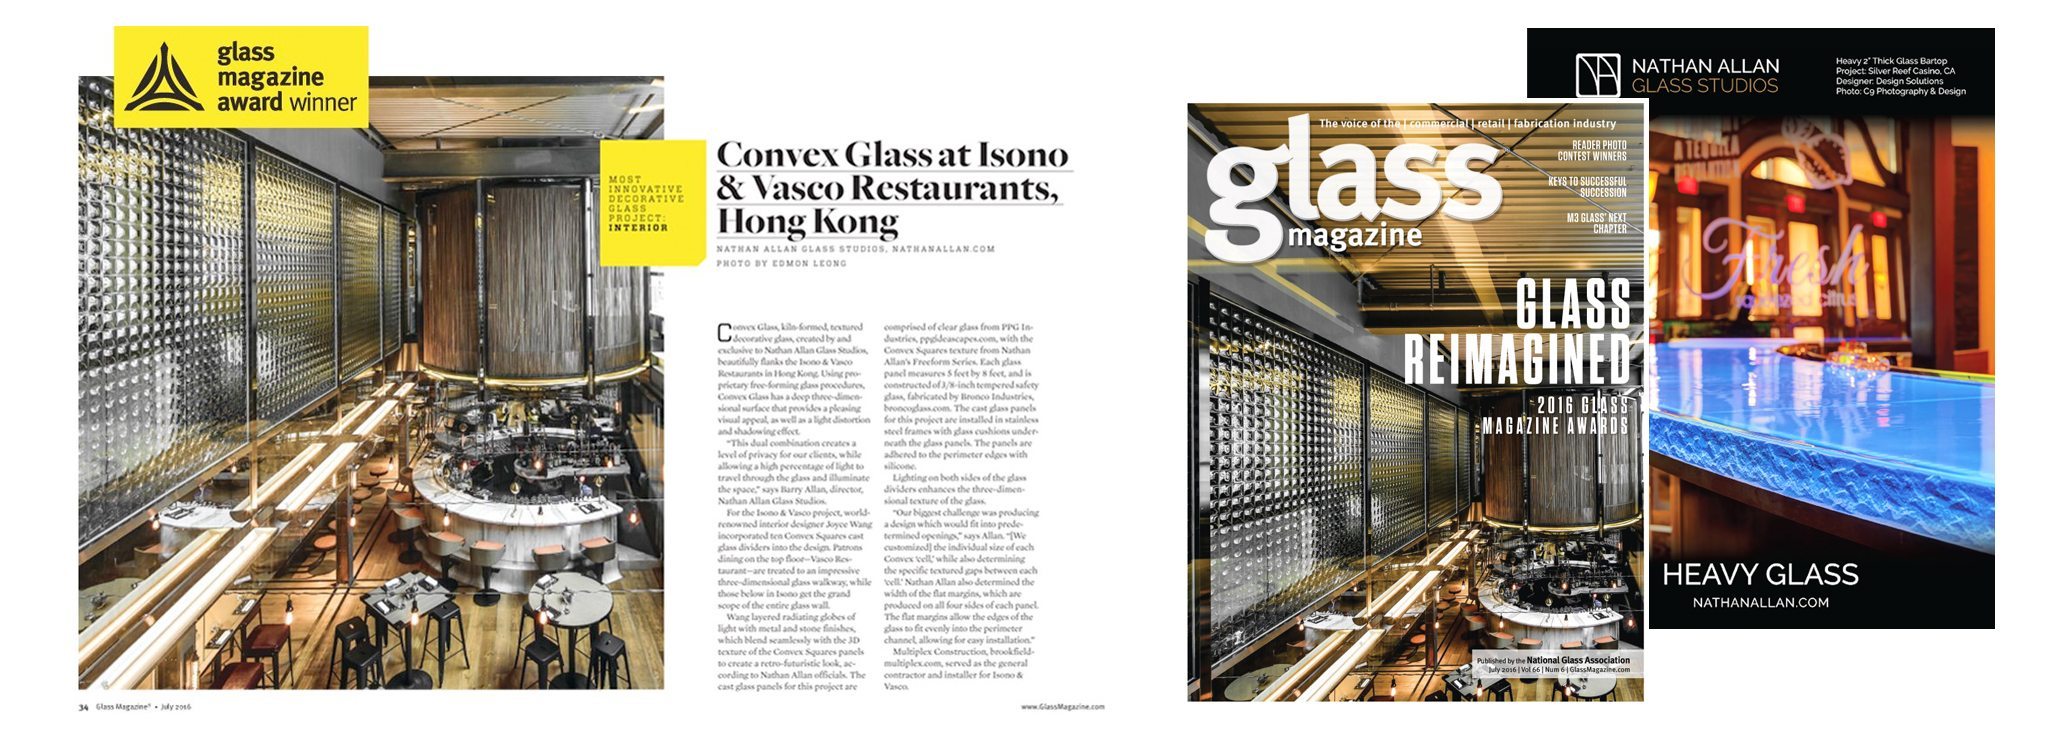 Glass Magazine Convex Glass Product Awards